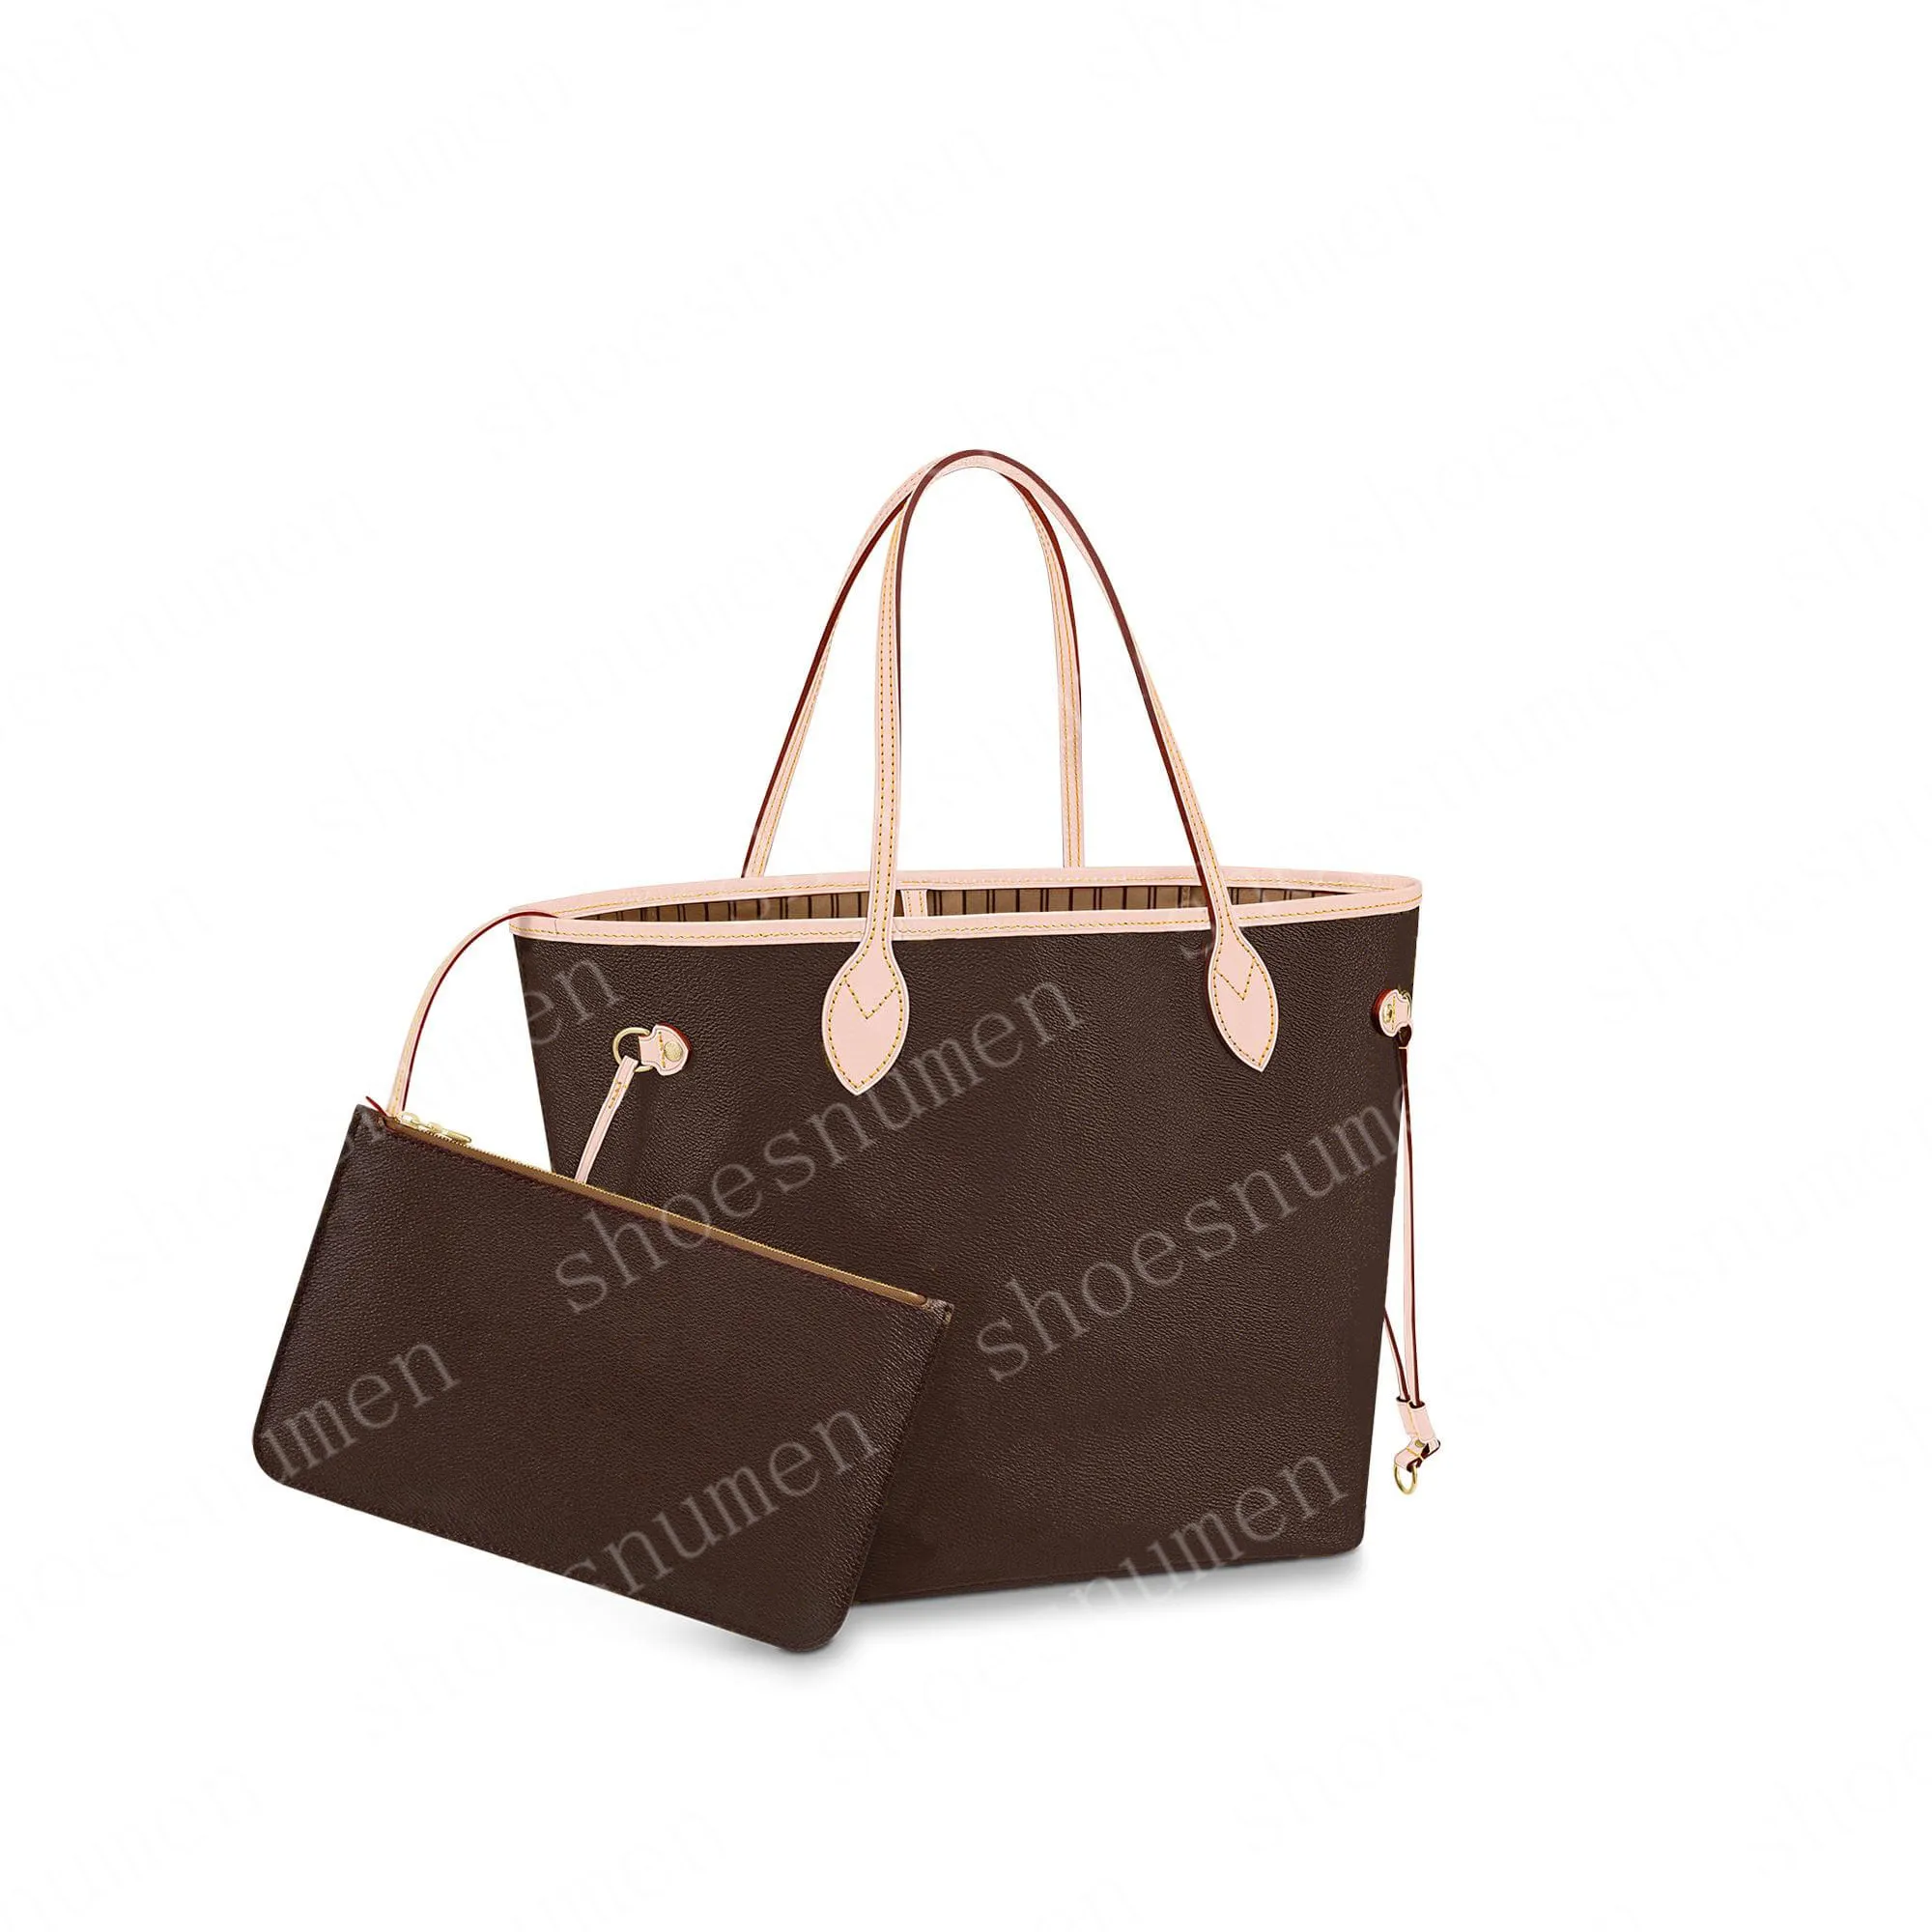 Totes Handbags Shoulder Bags Handbag Womens Backpack Women Tote Bag Purses Brown Leather Clutch Fashion Wallet #SS1-32